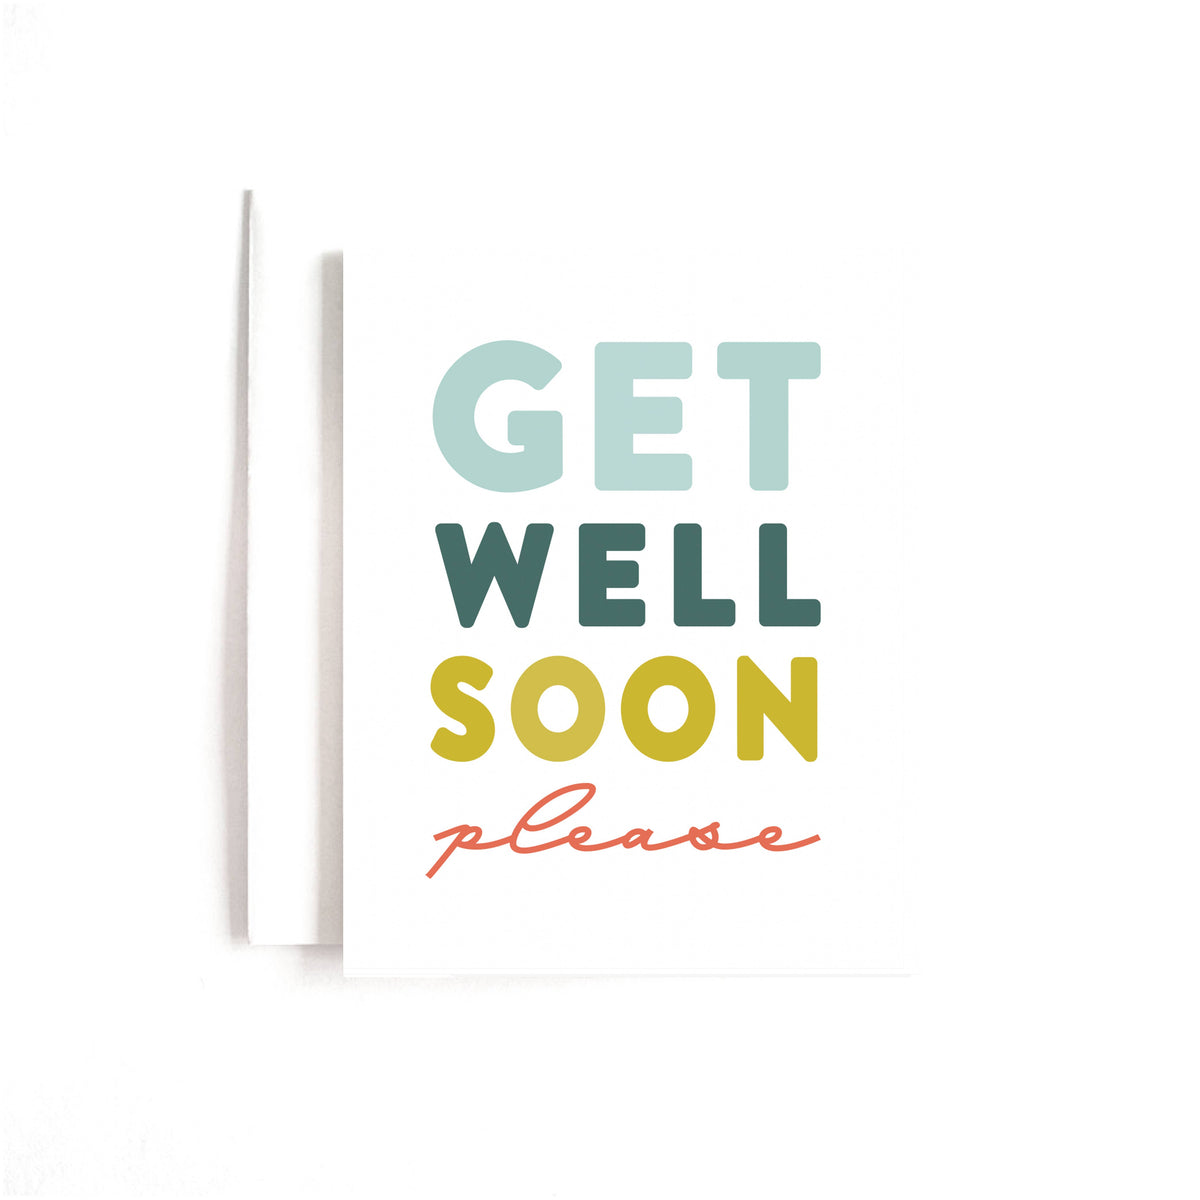 Get Well Soon Please Card